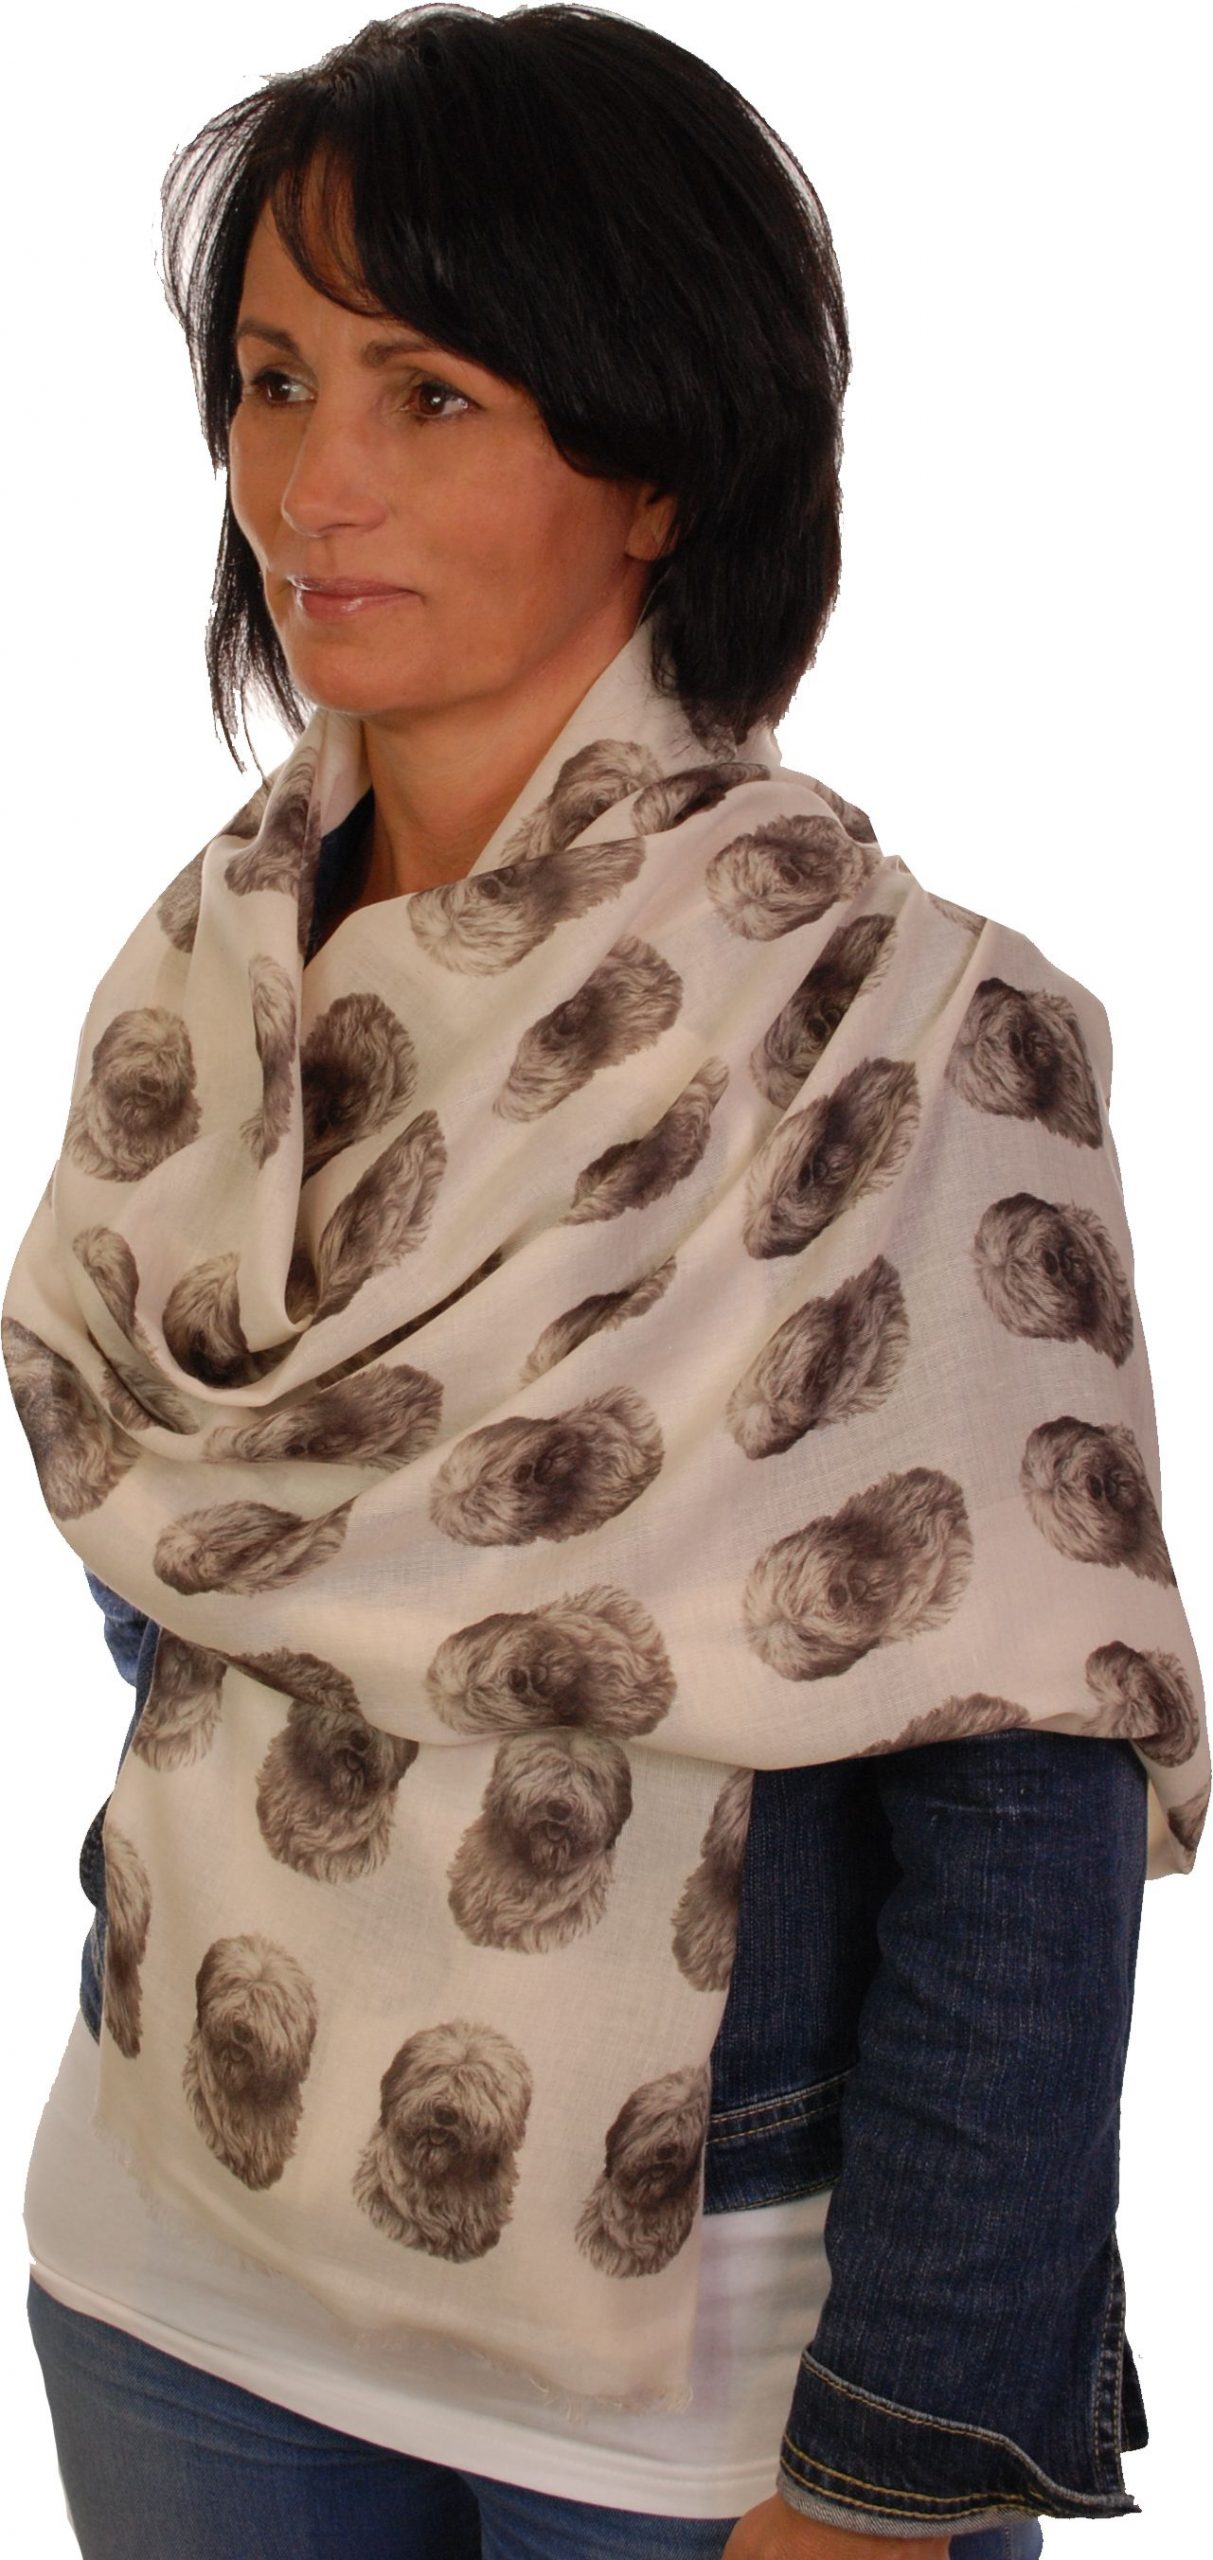 Mike Sibley Old English Sheepdog licensed design ladies fashion scarf